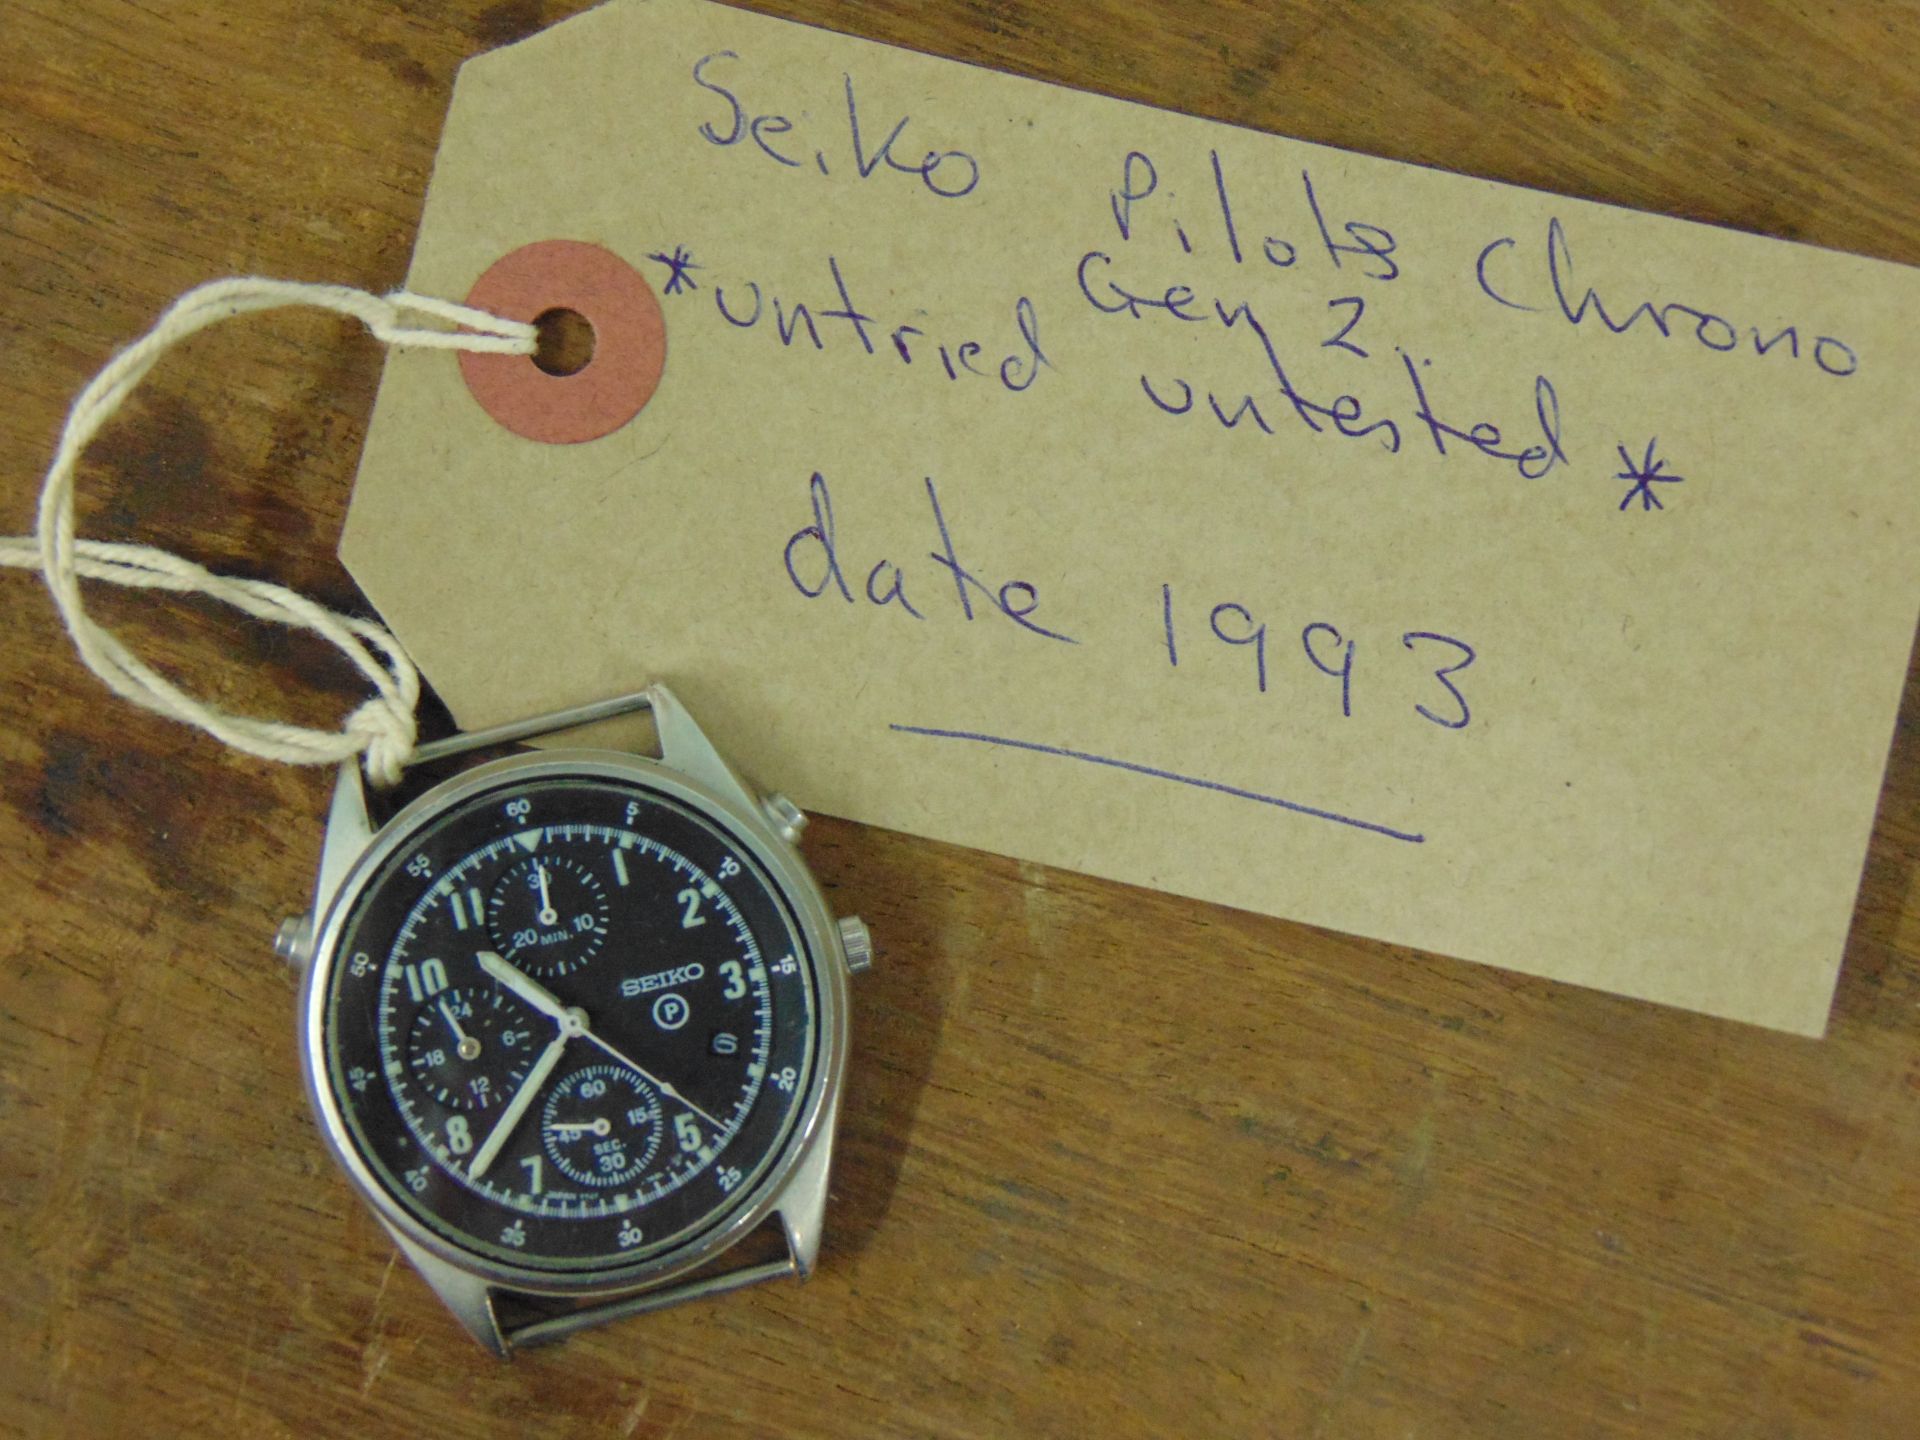 1 x Seiko Pilots Chronograph Generation 2 - Image 3 of 4